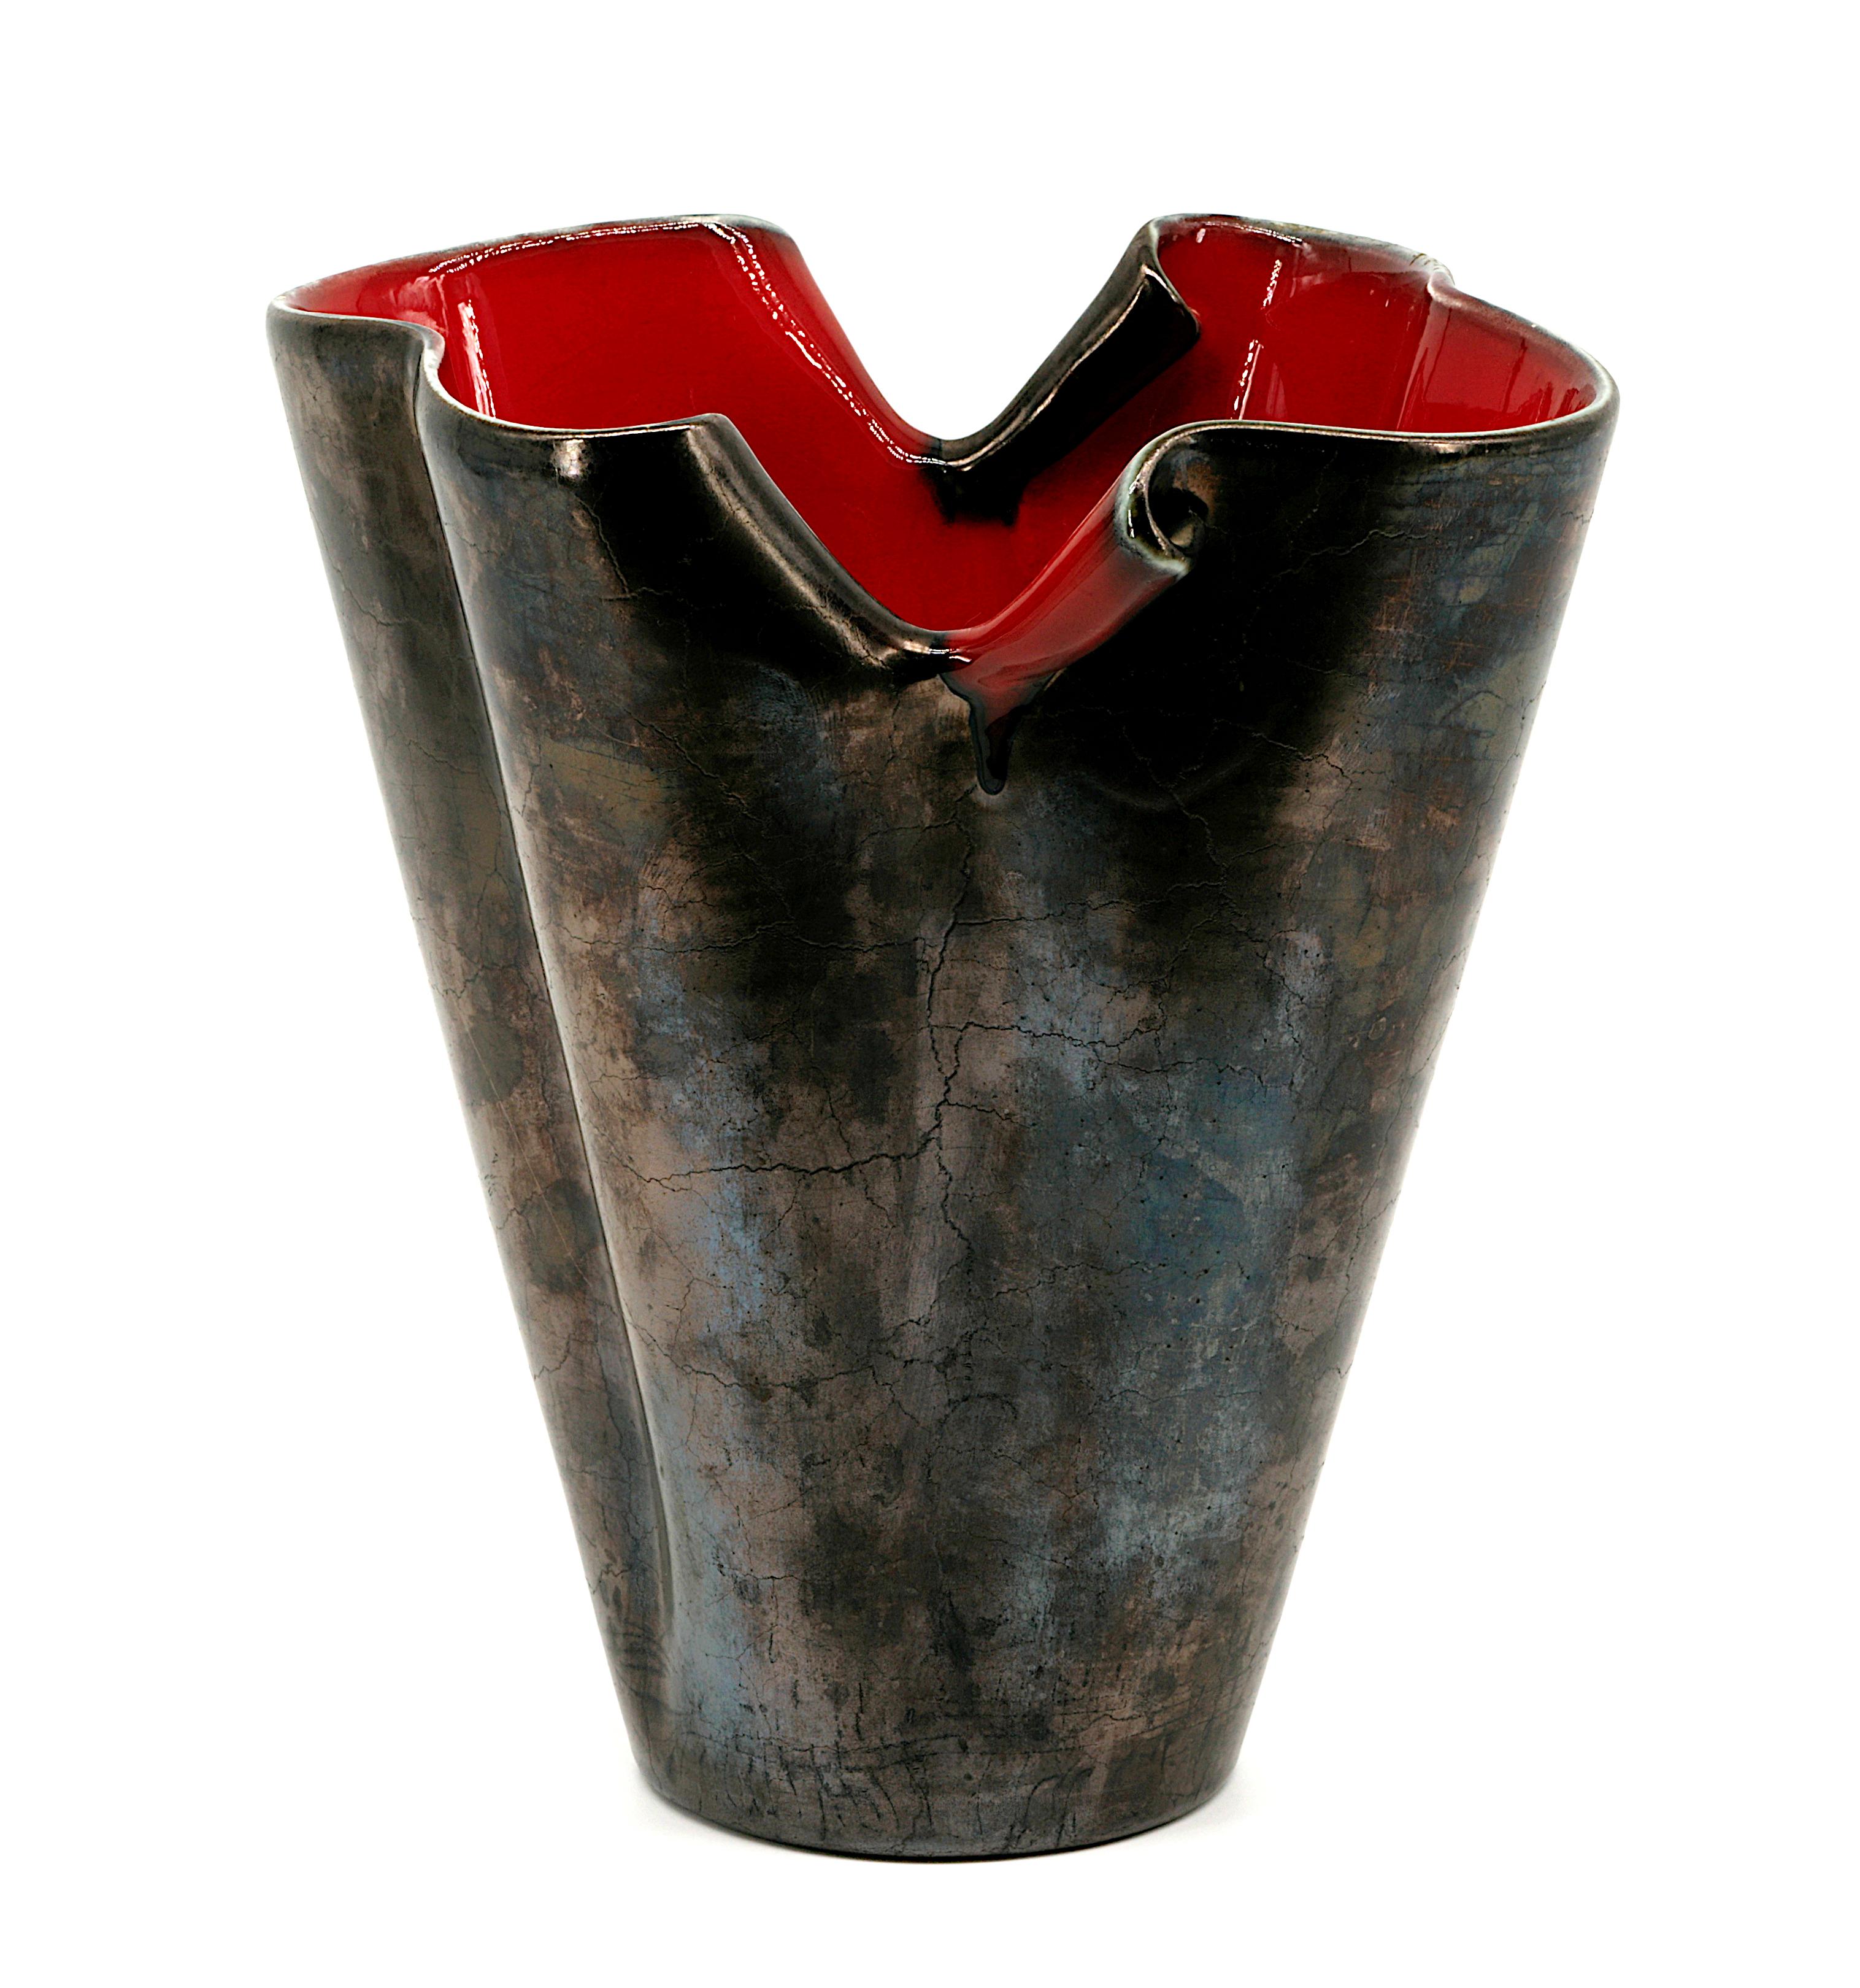 French midcentury stoneware vase by Ferdinand Elchinger (Soufflenheim ), France, 1950s. Measures: Height: 10